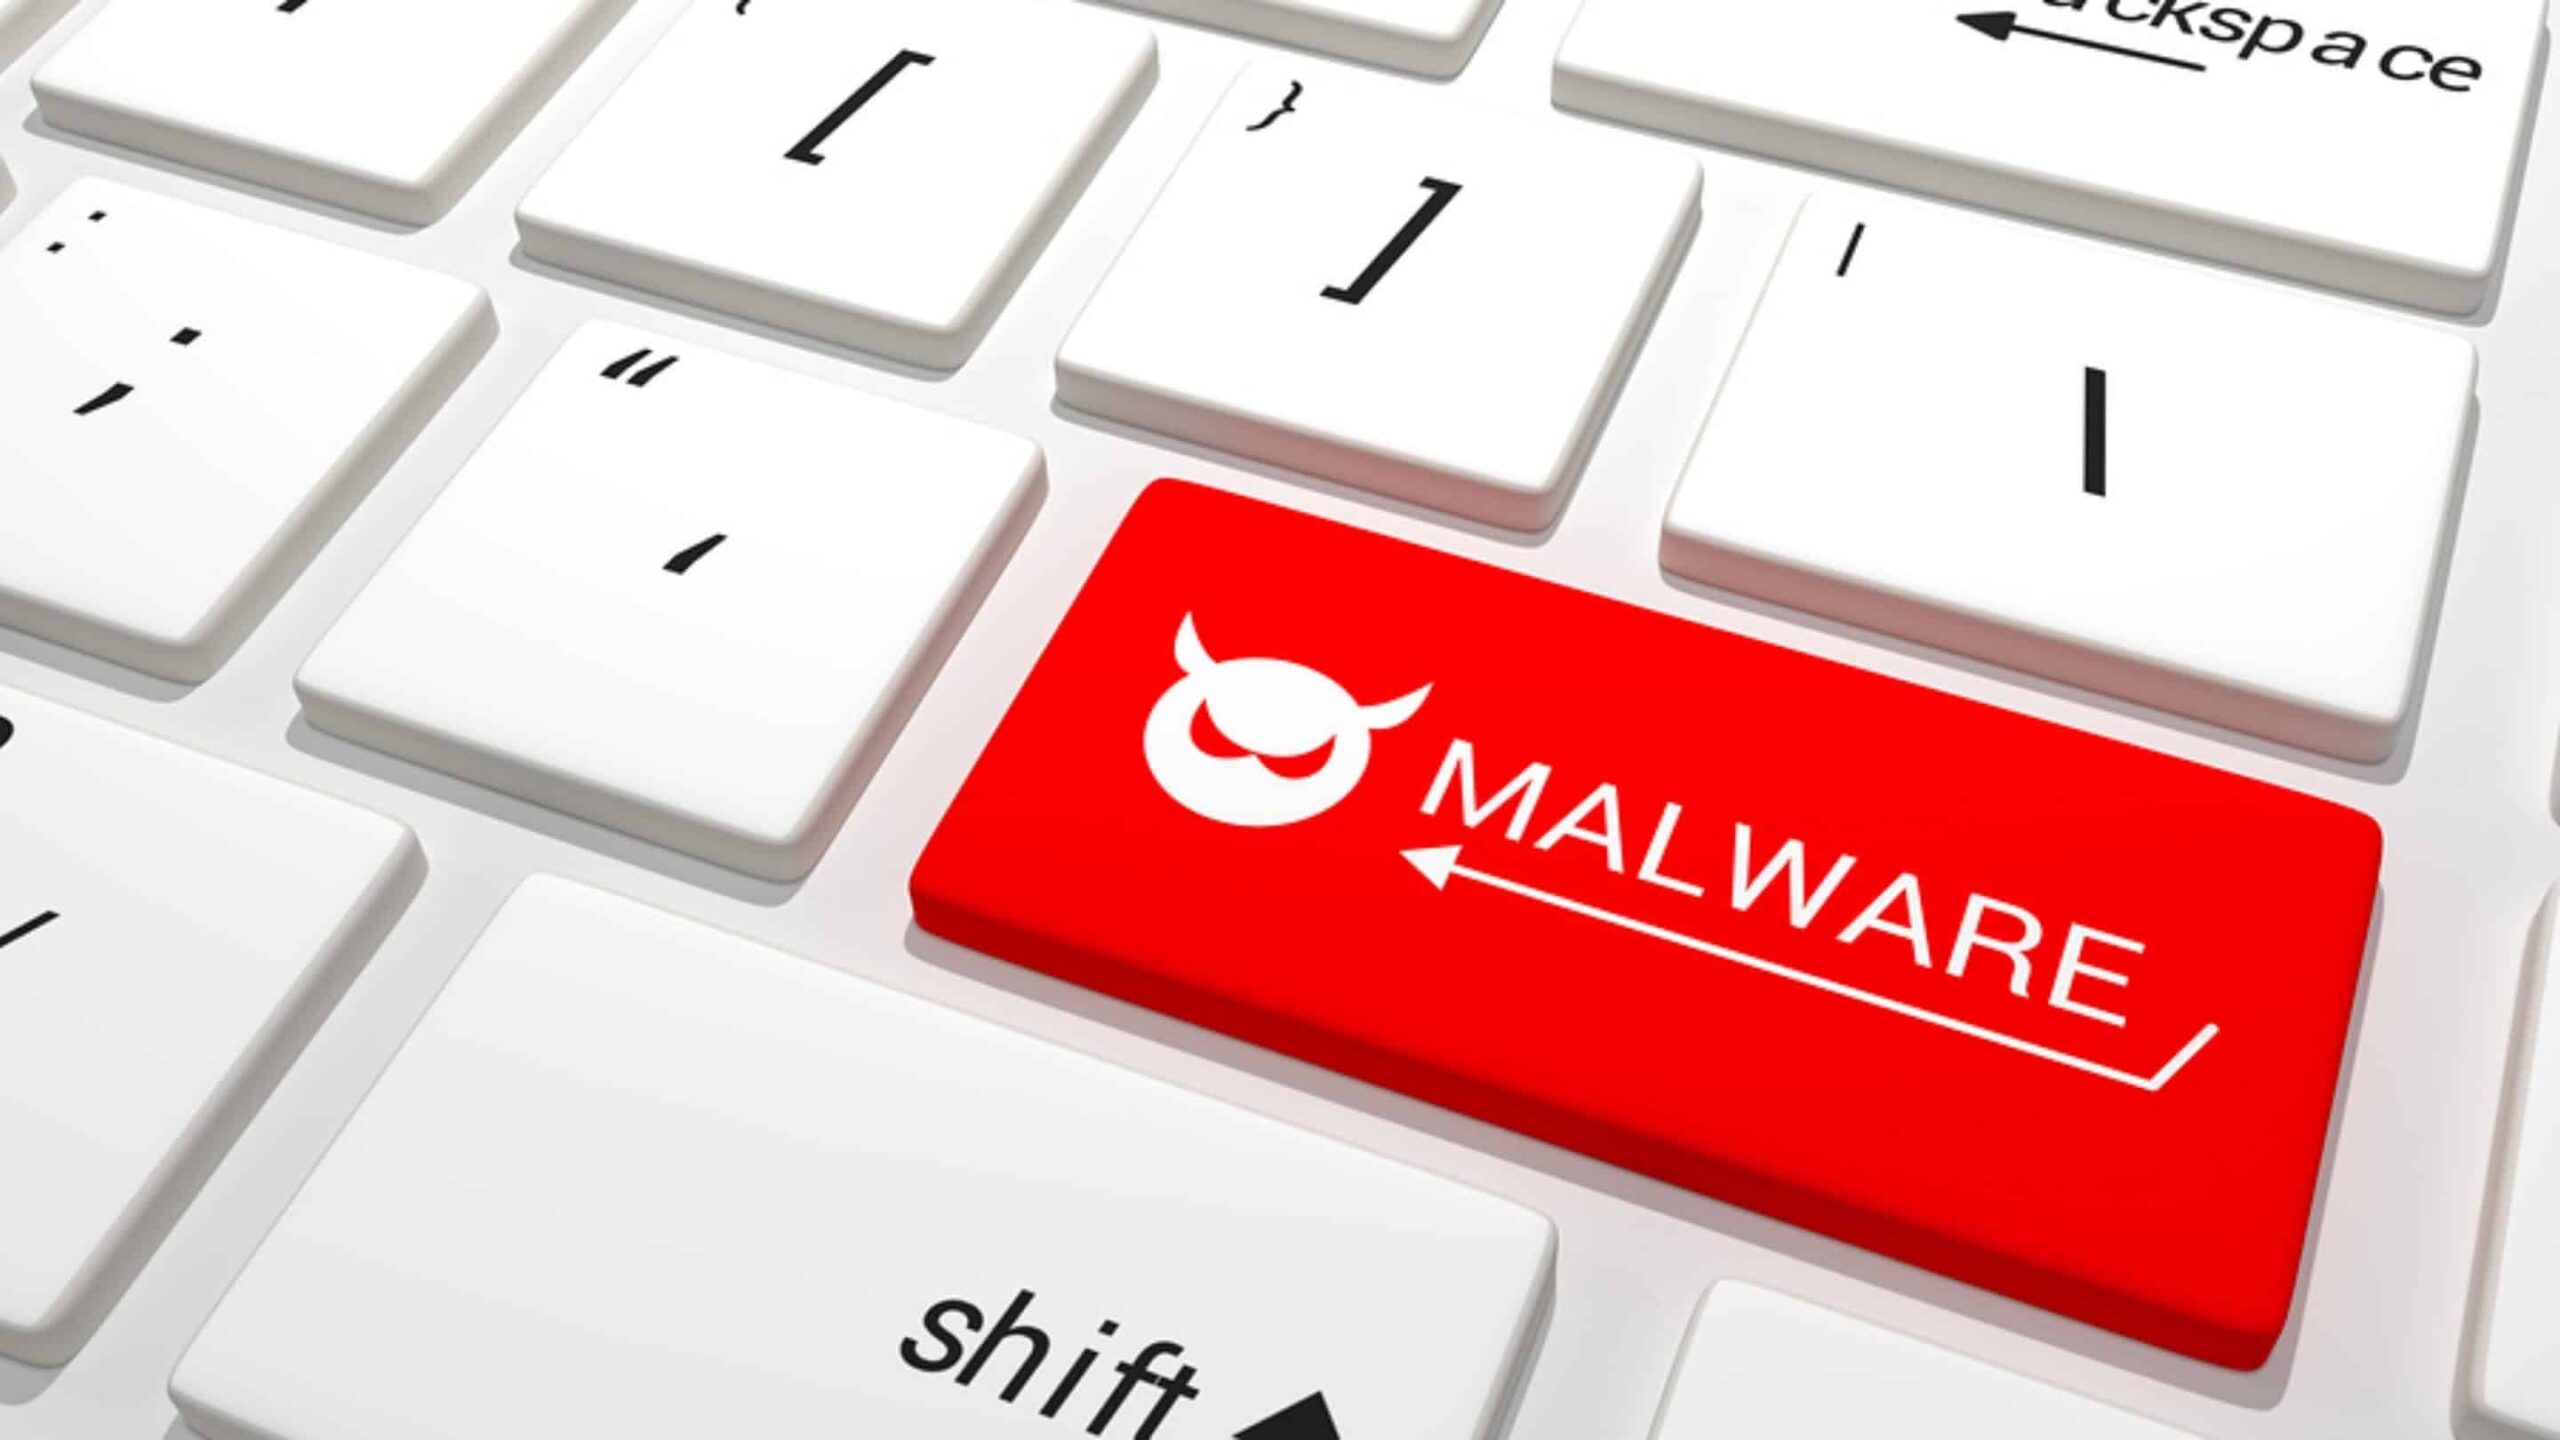 AgentTesla assume o primeiro lugar nos rankings de malwares global e do Brasil